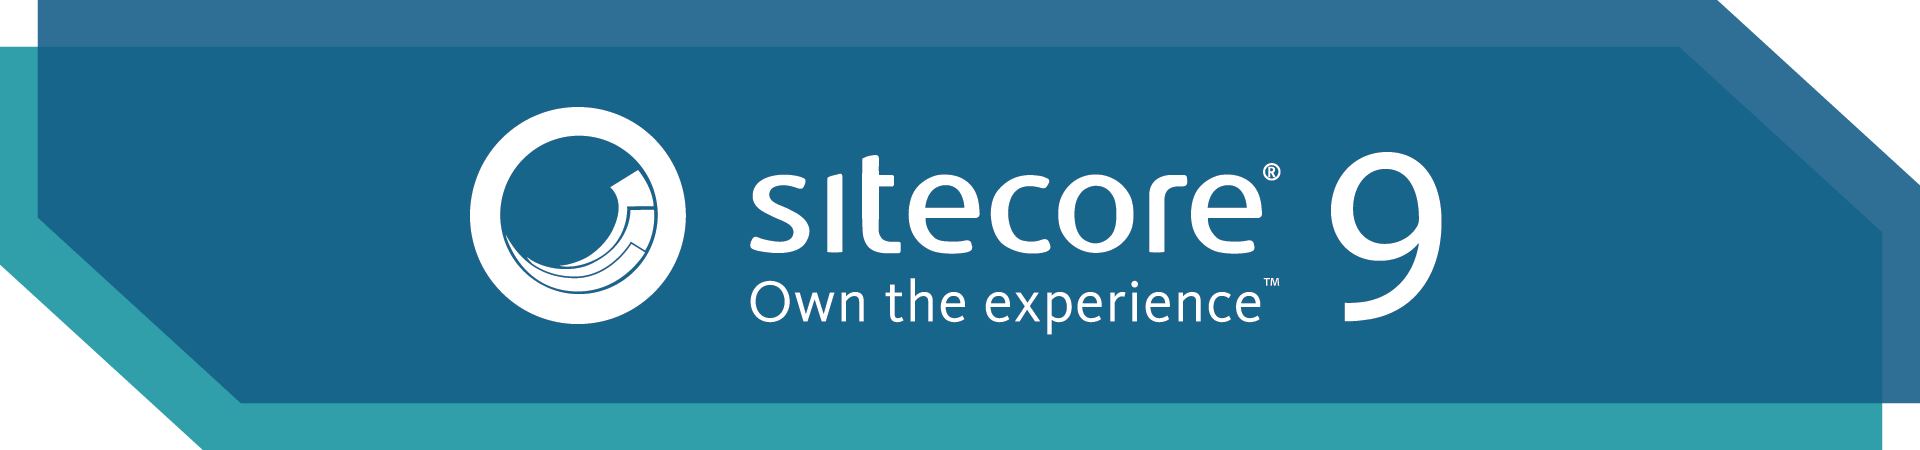 Sitecore 9 Announced